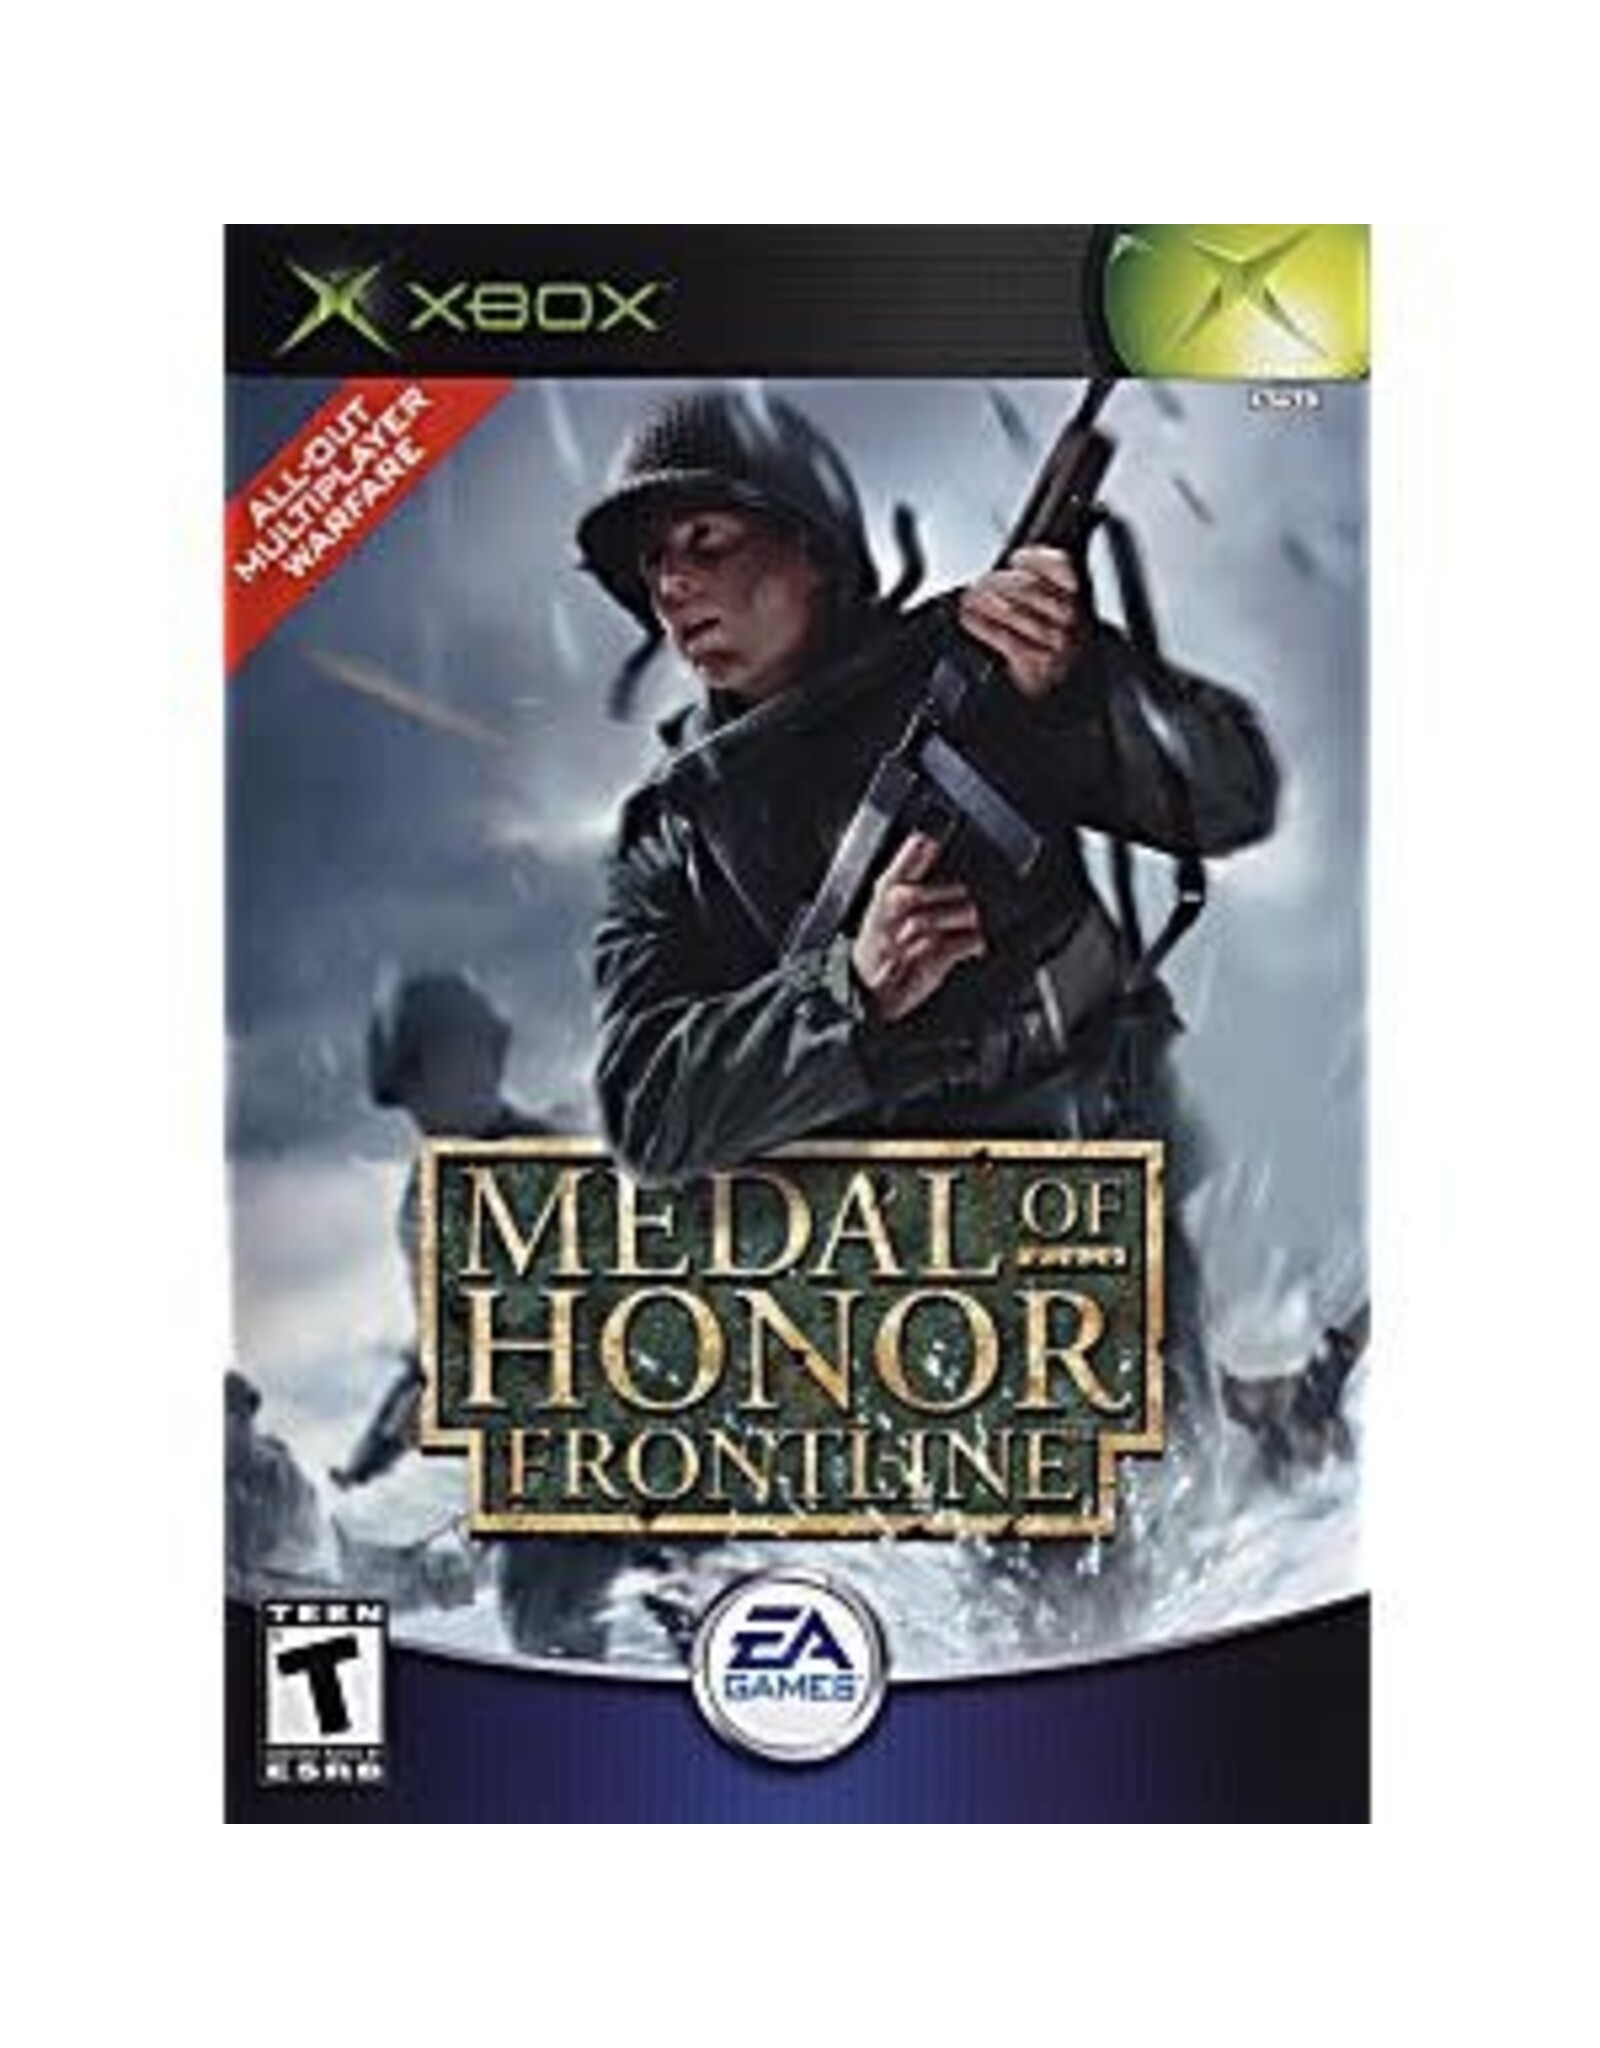 Xbox Medal of Honor Frontline (CiB)